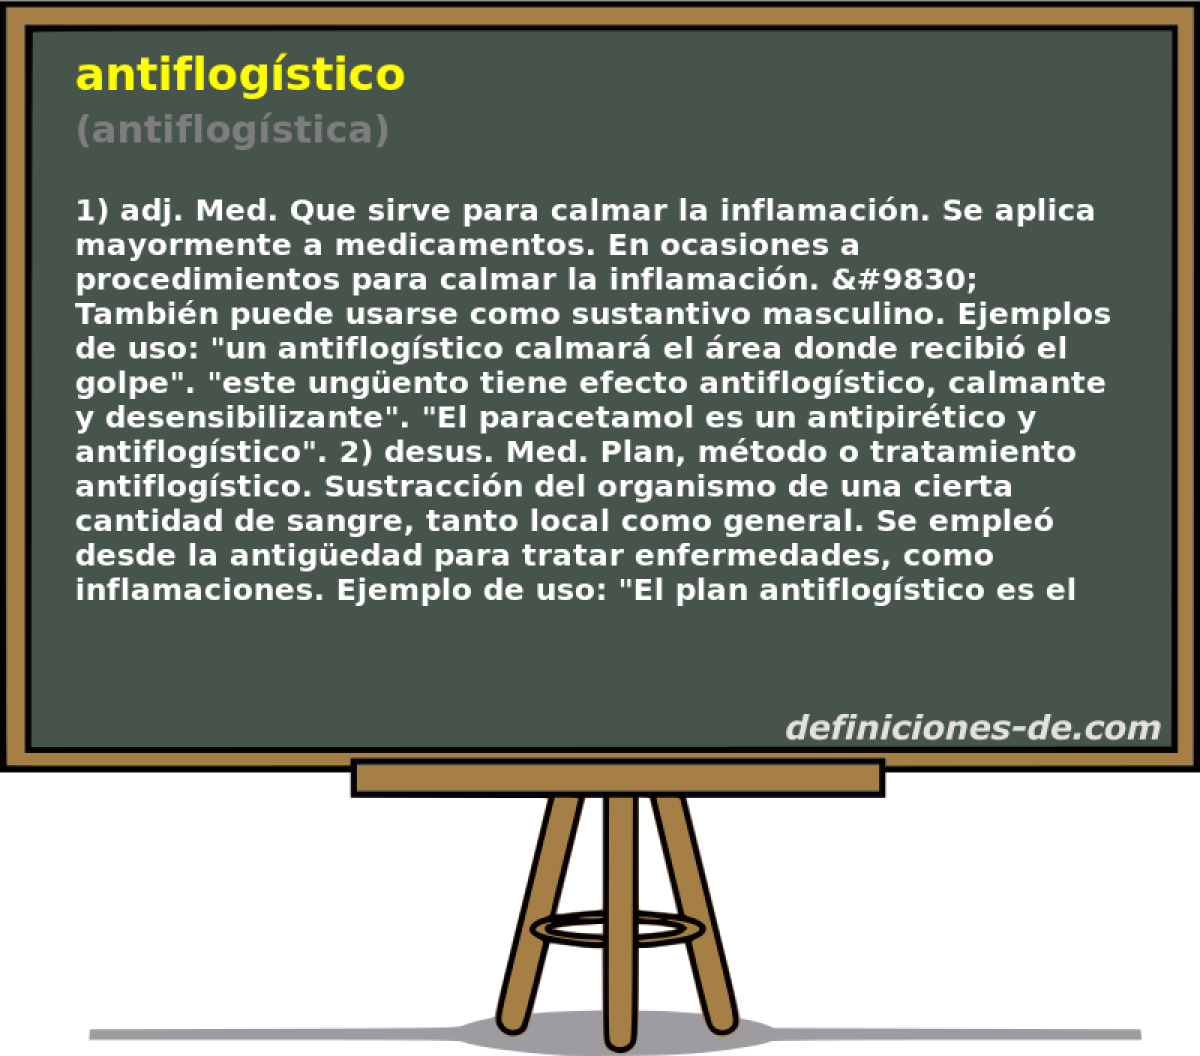 antiflogstico (antiflogstica)